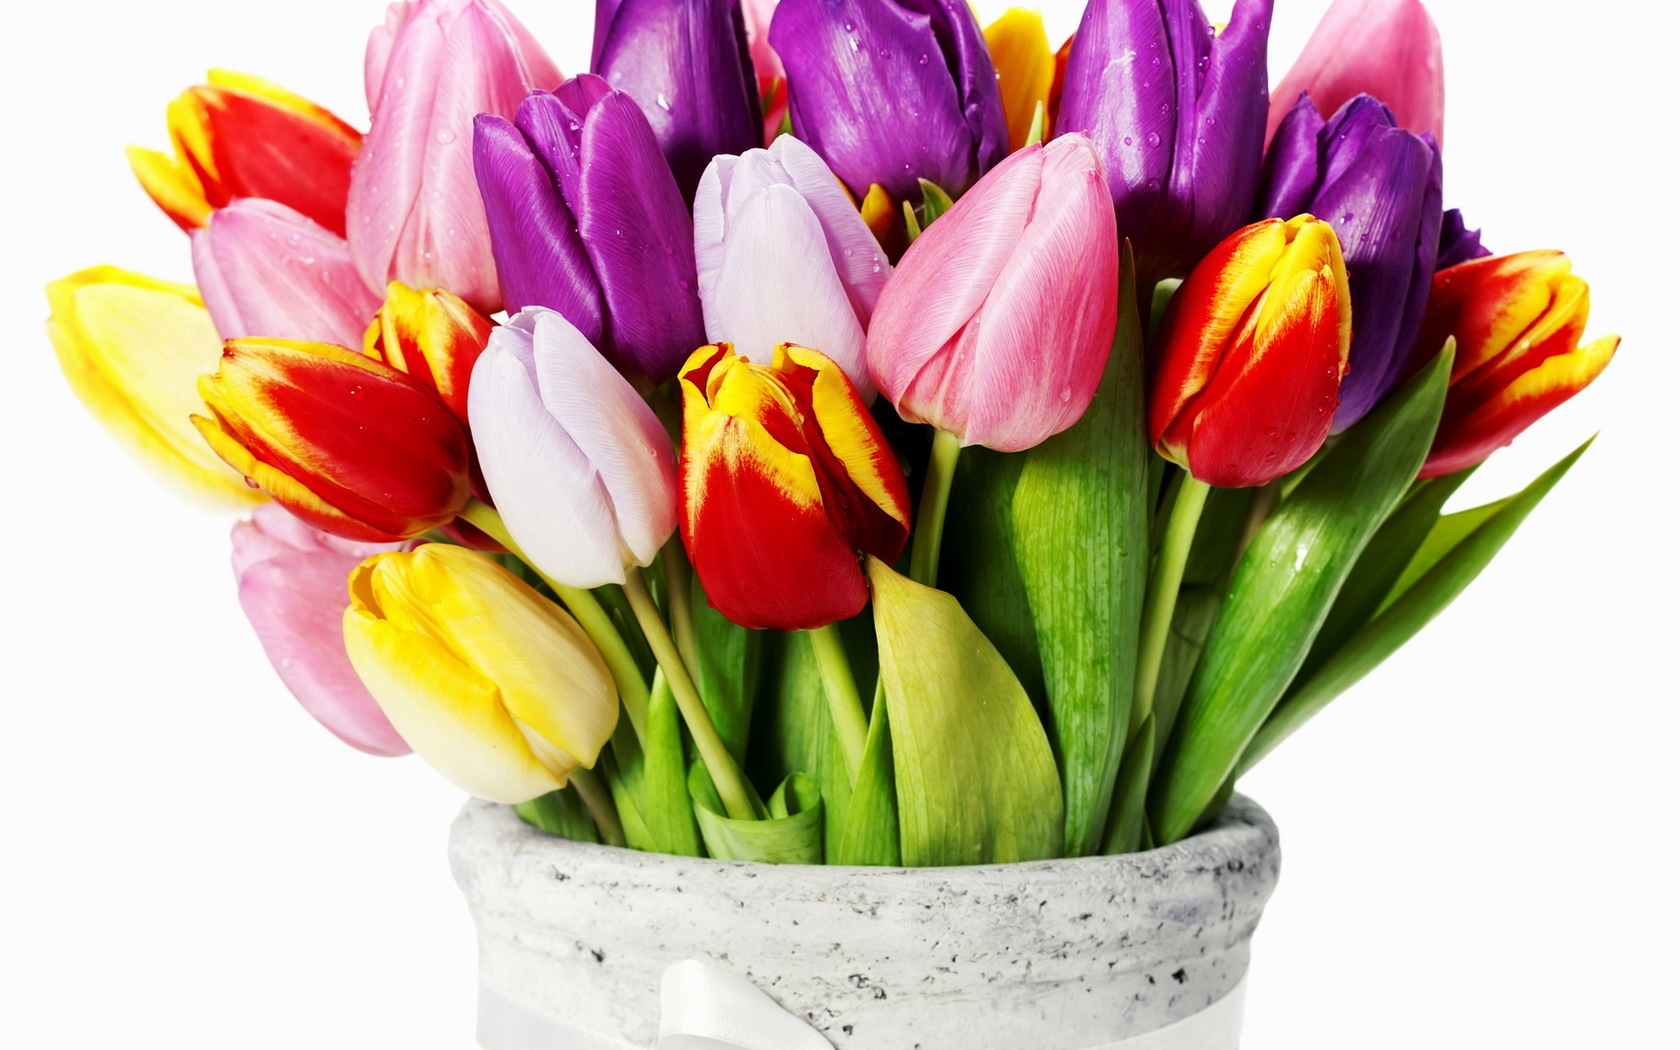 bouquets, plants, flowers, tulips lock screen backgrounds